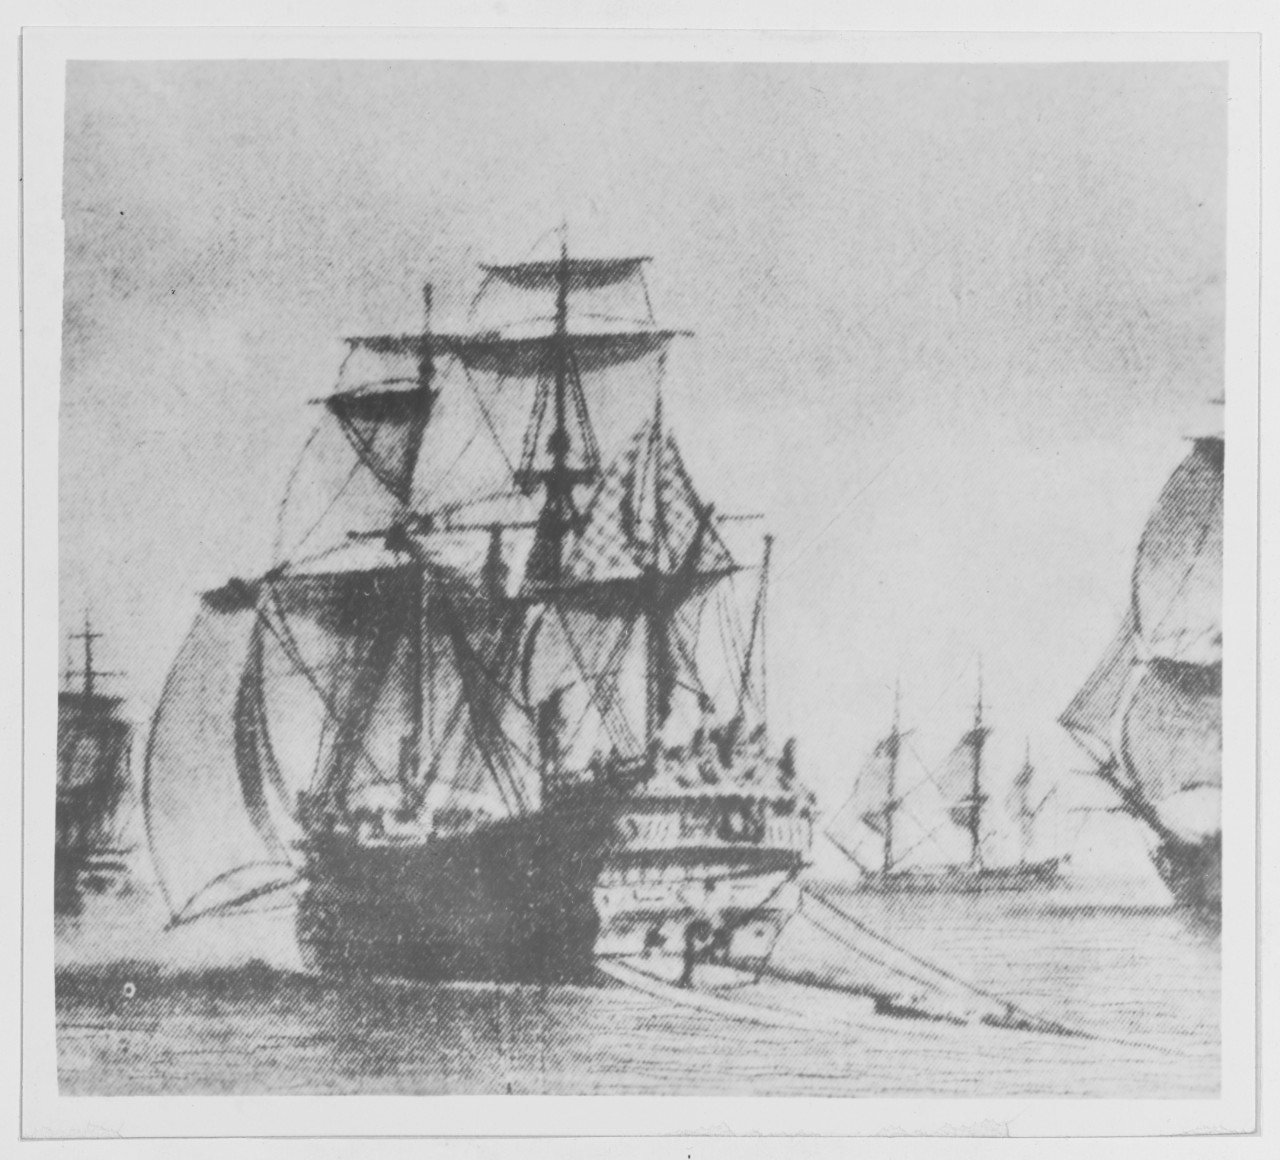 LANGUEDOC, Flagship of D'Estaing's Fleet leaving Newport